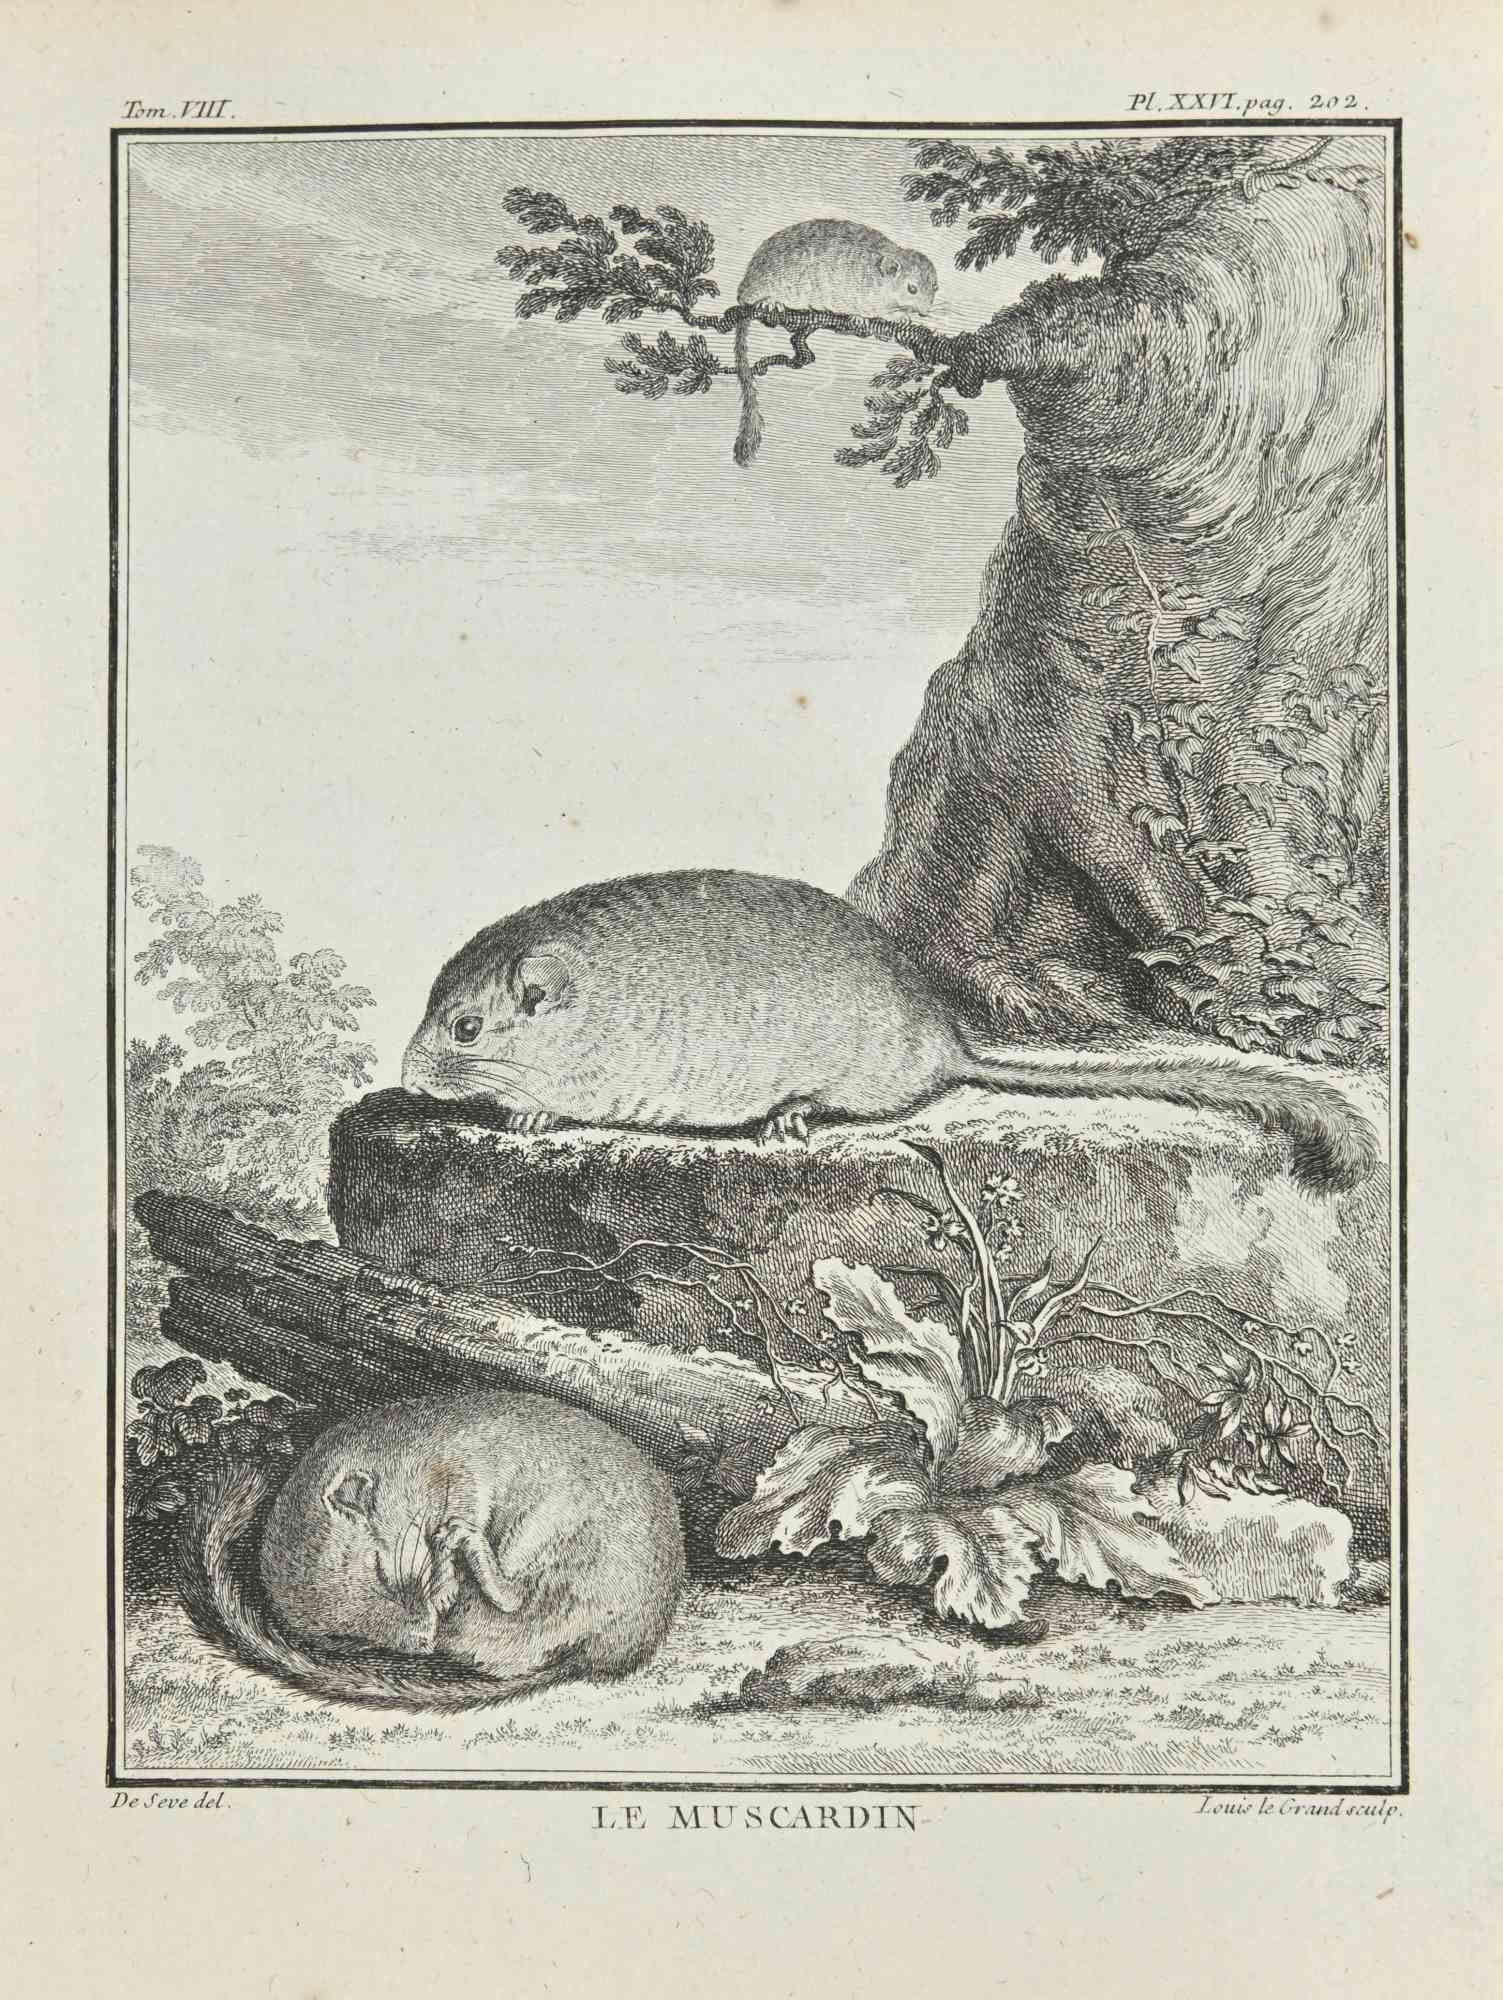 Le Muscardin - Gravure de Louis Legrand - 1771